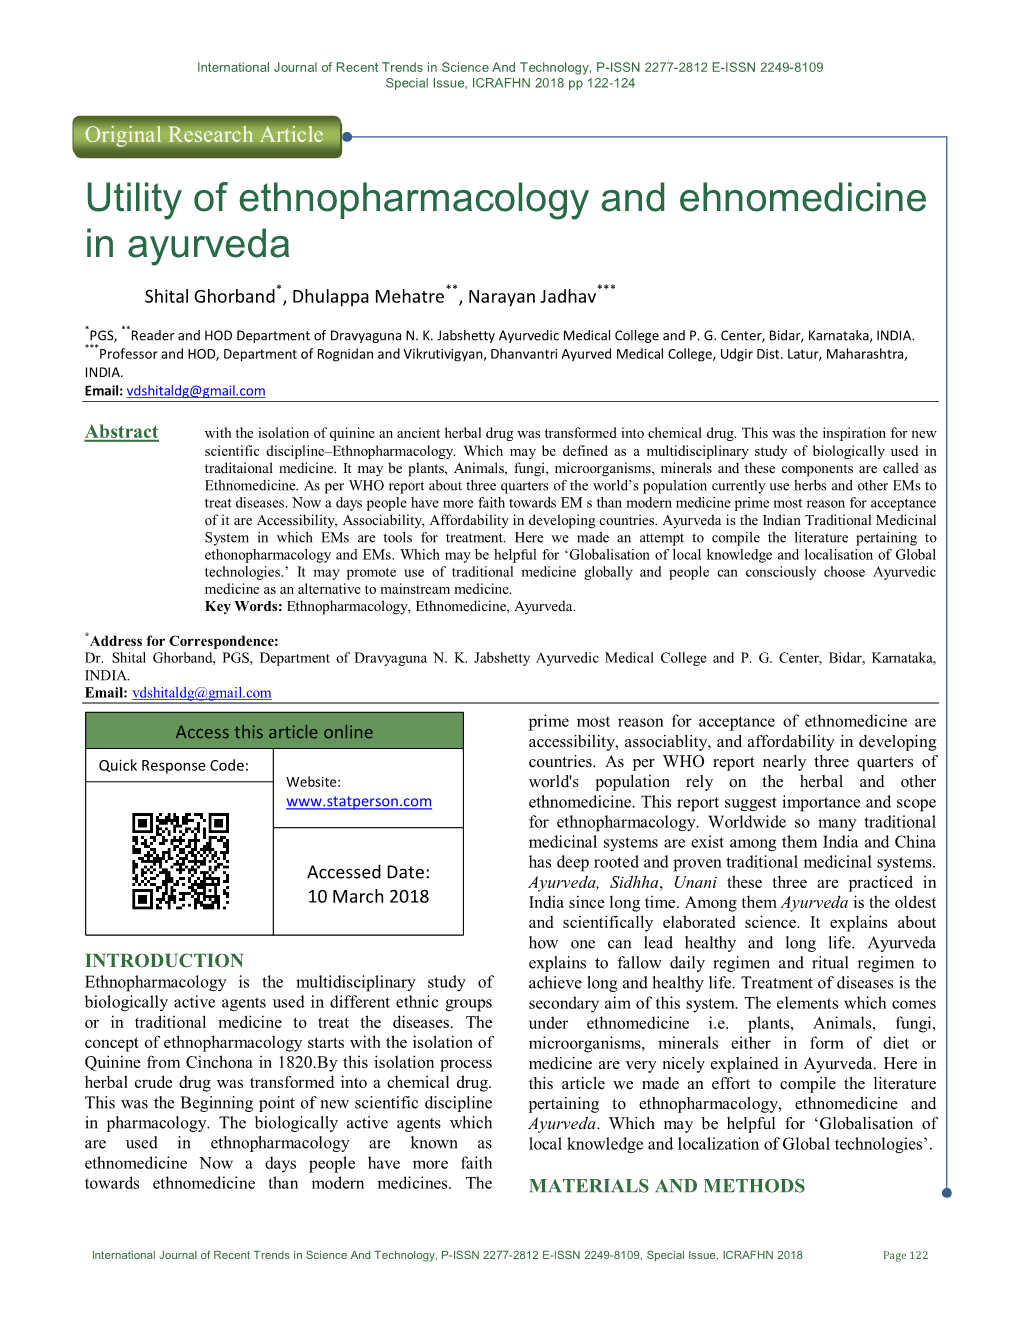 Utility of Ethnopharmacology and Ehnomedicine in Ayurveda